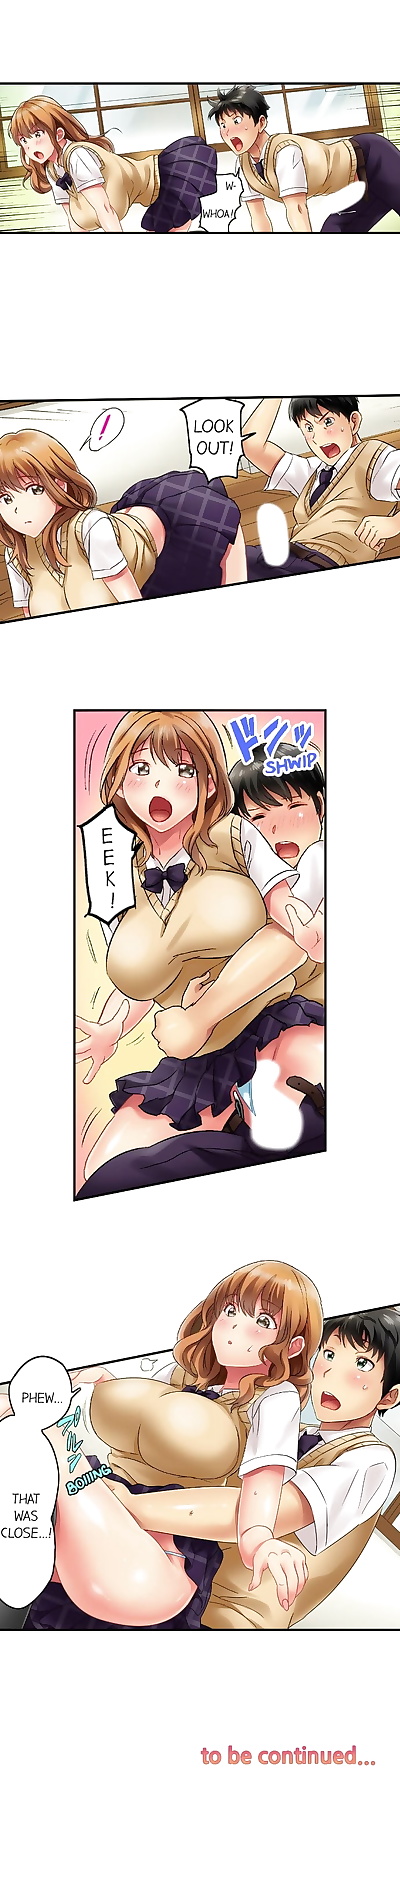 english manga Seeing Her Panties Lets Me Stick In Ch.1, full color , manga  full censorship